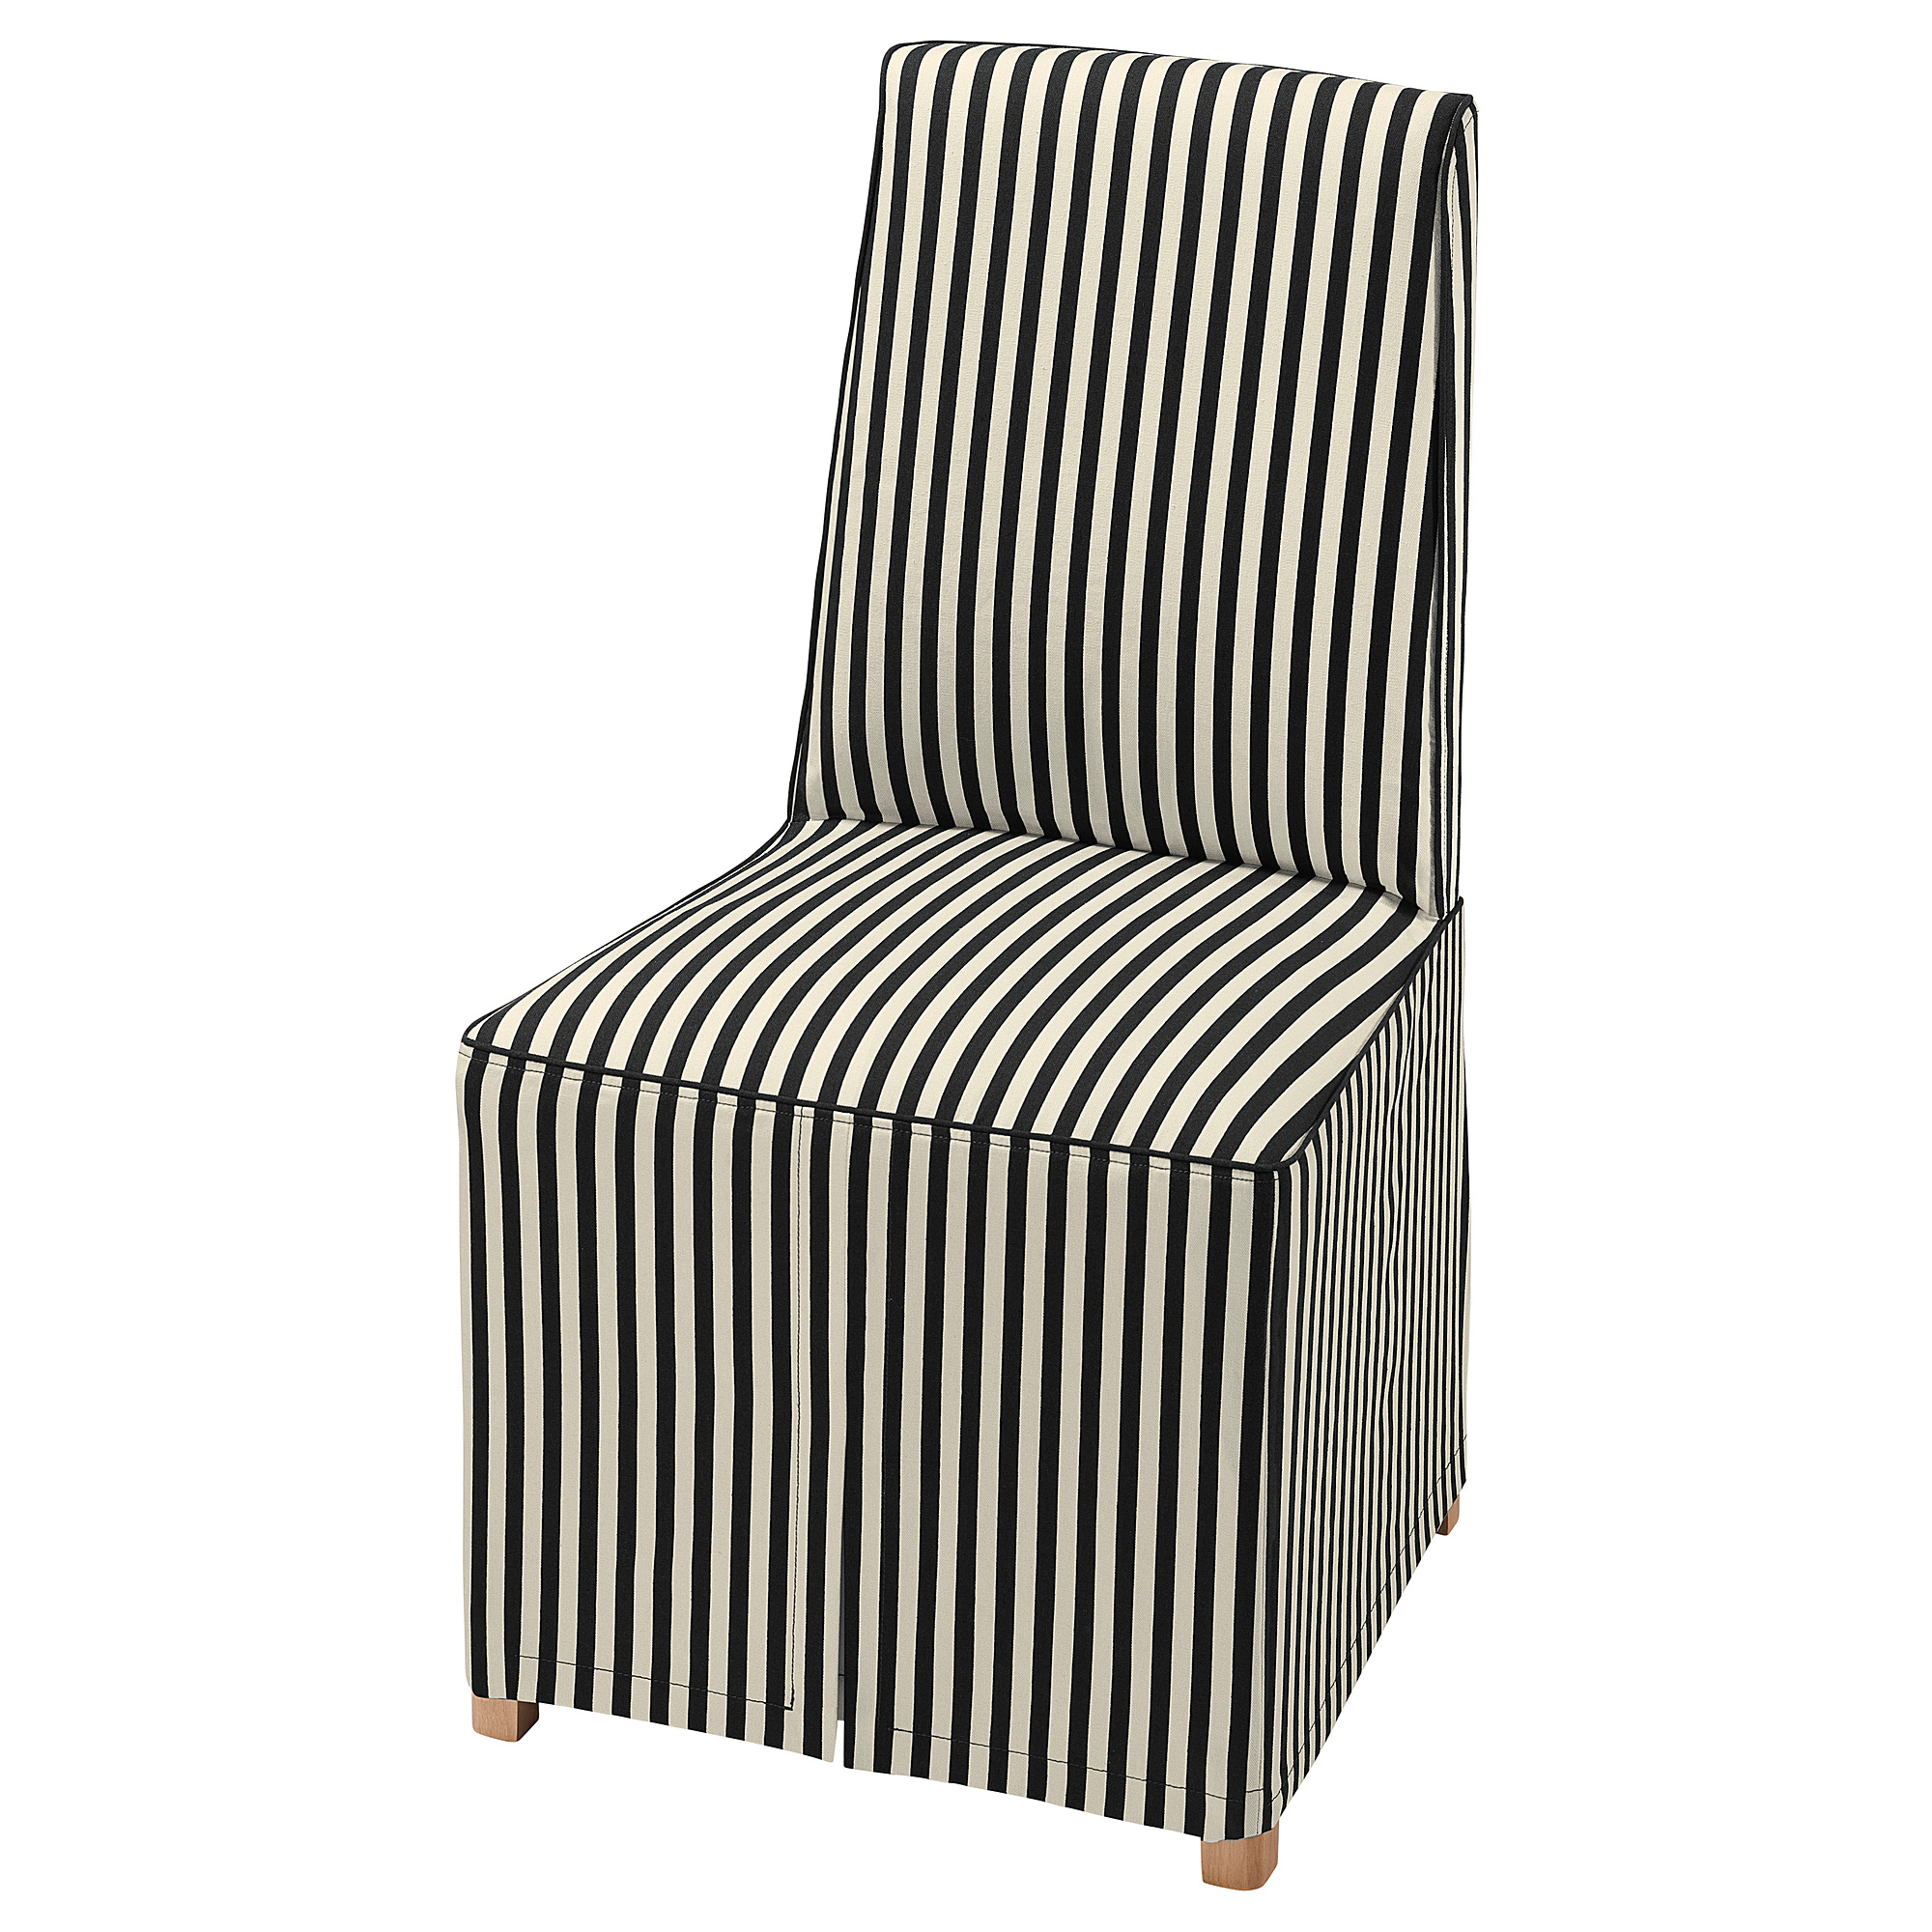 BERGMUND chair cover, long